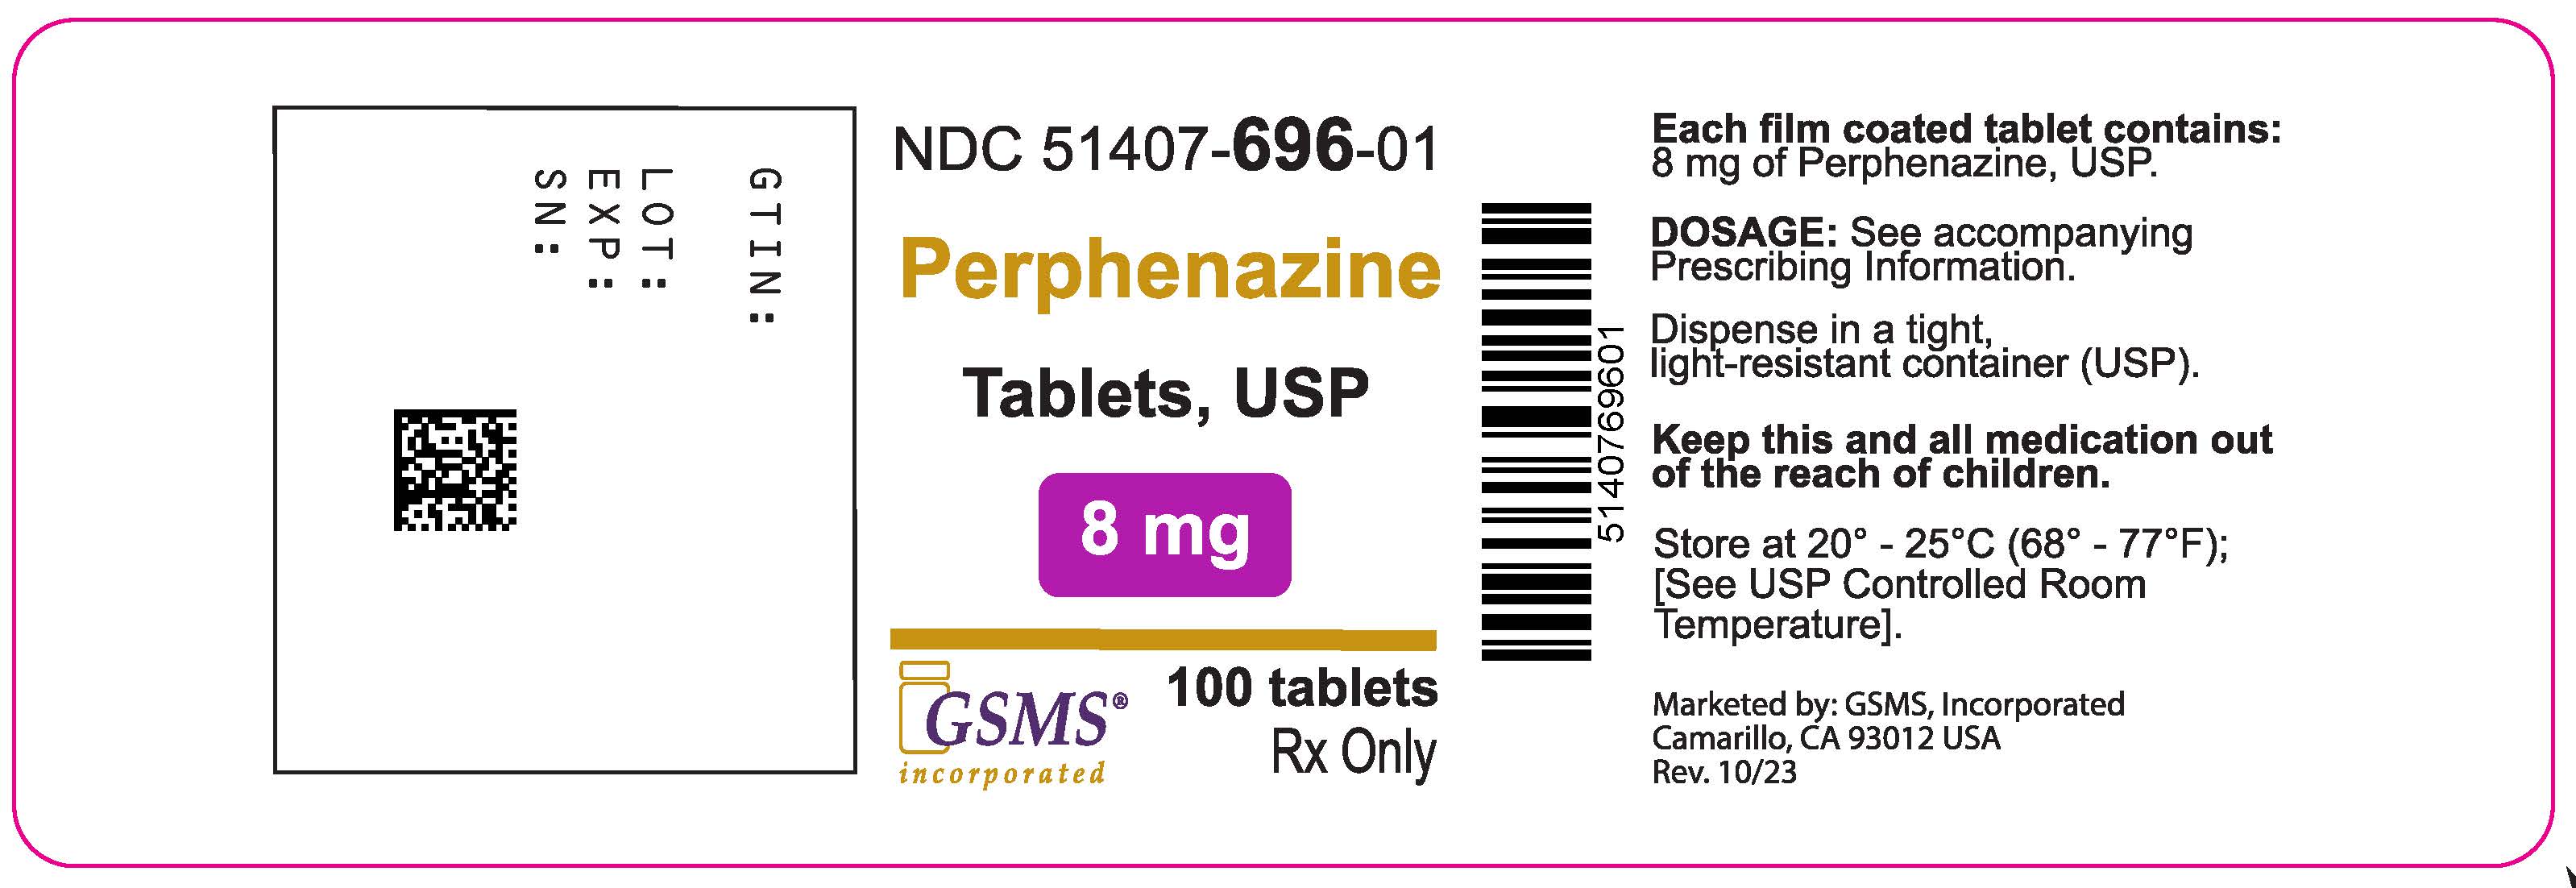 51407-696-01OL - PERPHENAZINE TABLETS 8 mg 100ct - ZYDUS - REV 10.23